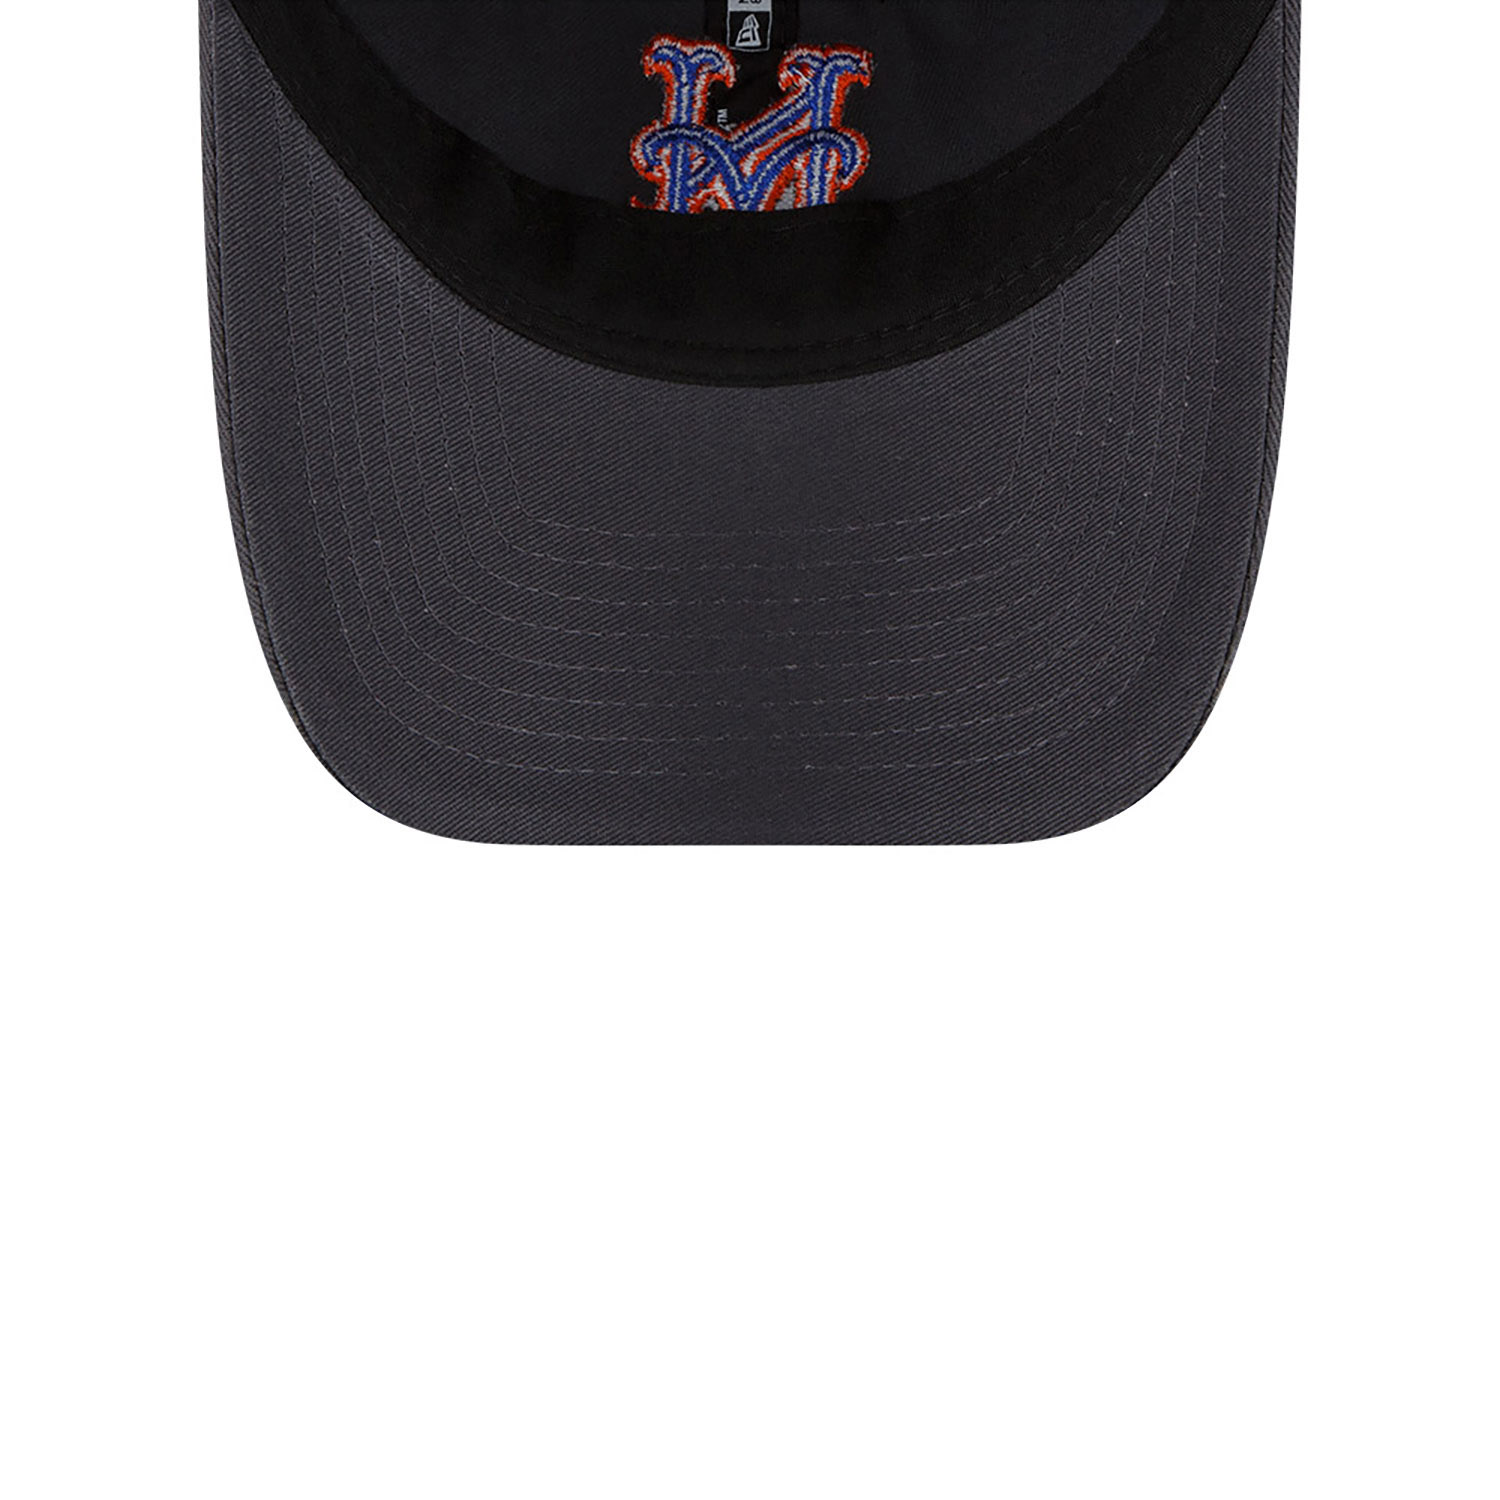 New York Mets MLB Core Classic Dark Grey 9TWENTY Adjustable Cap